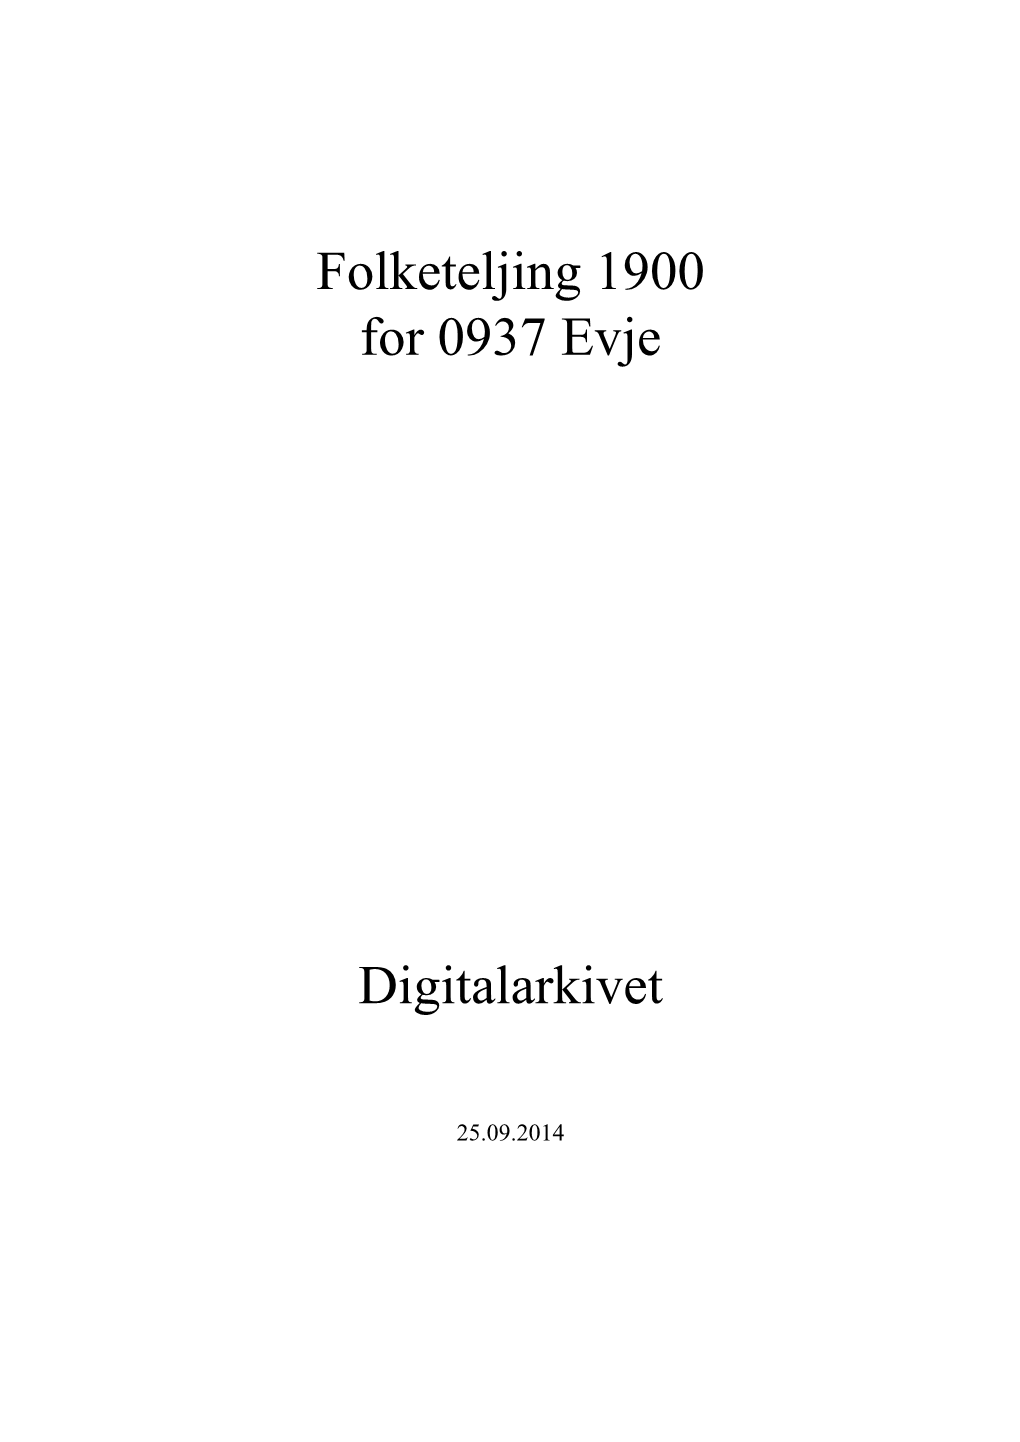 Folketeljing 1900 for 0937 Evje Digitalarkivet